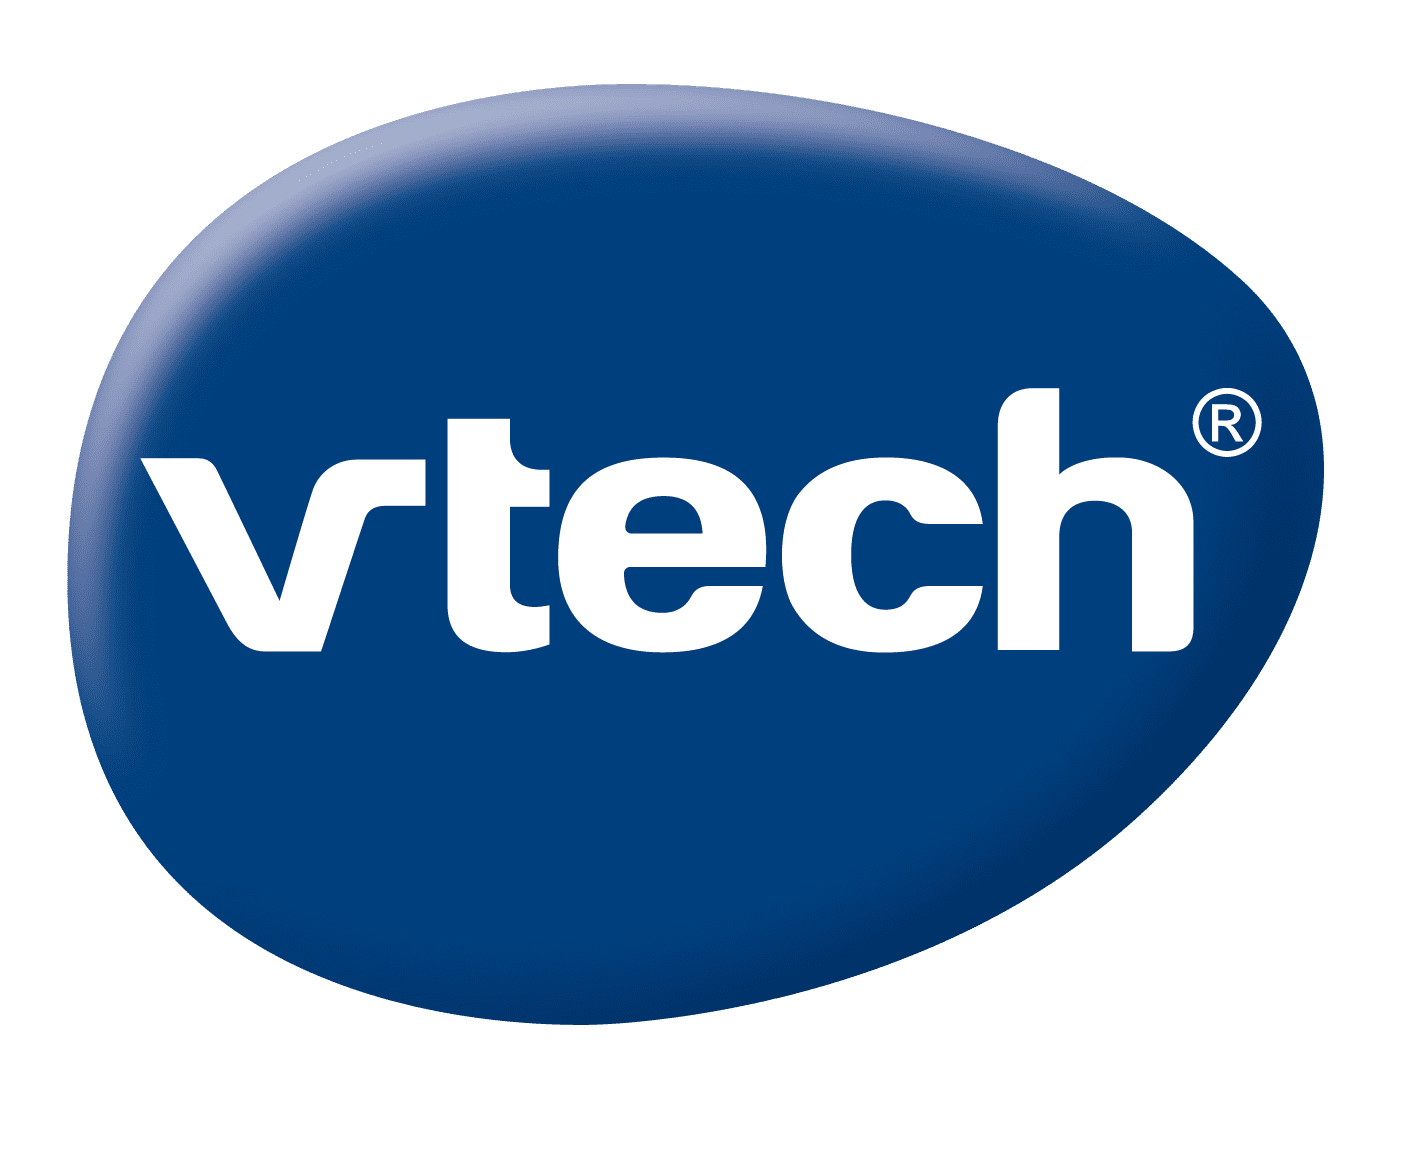 VTech Coupons